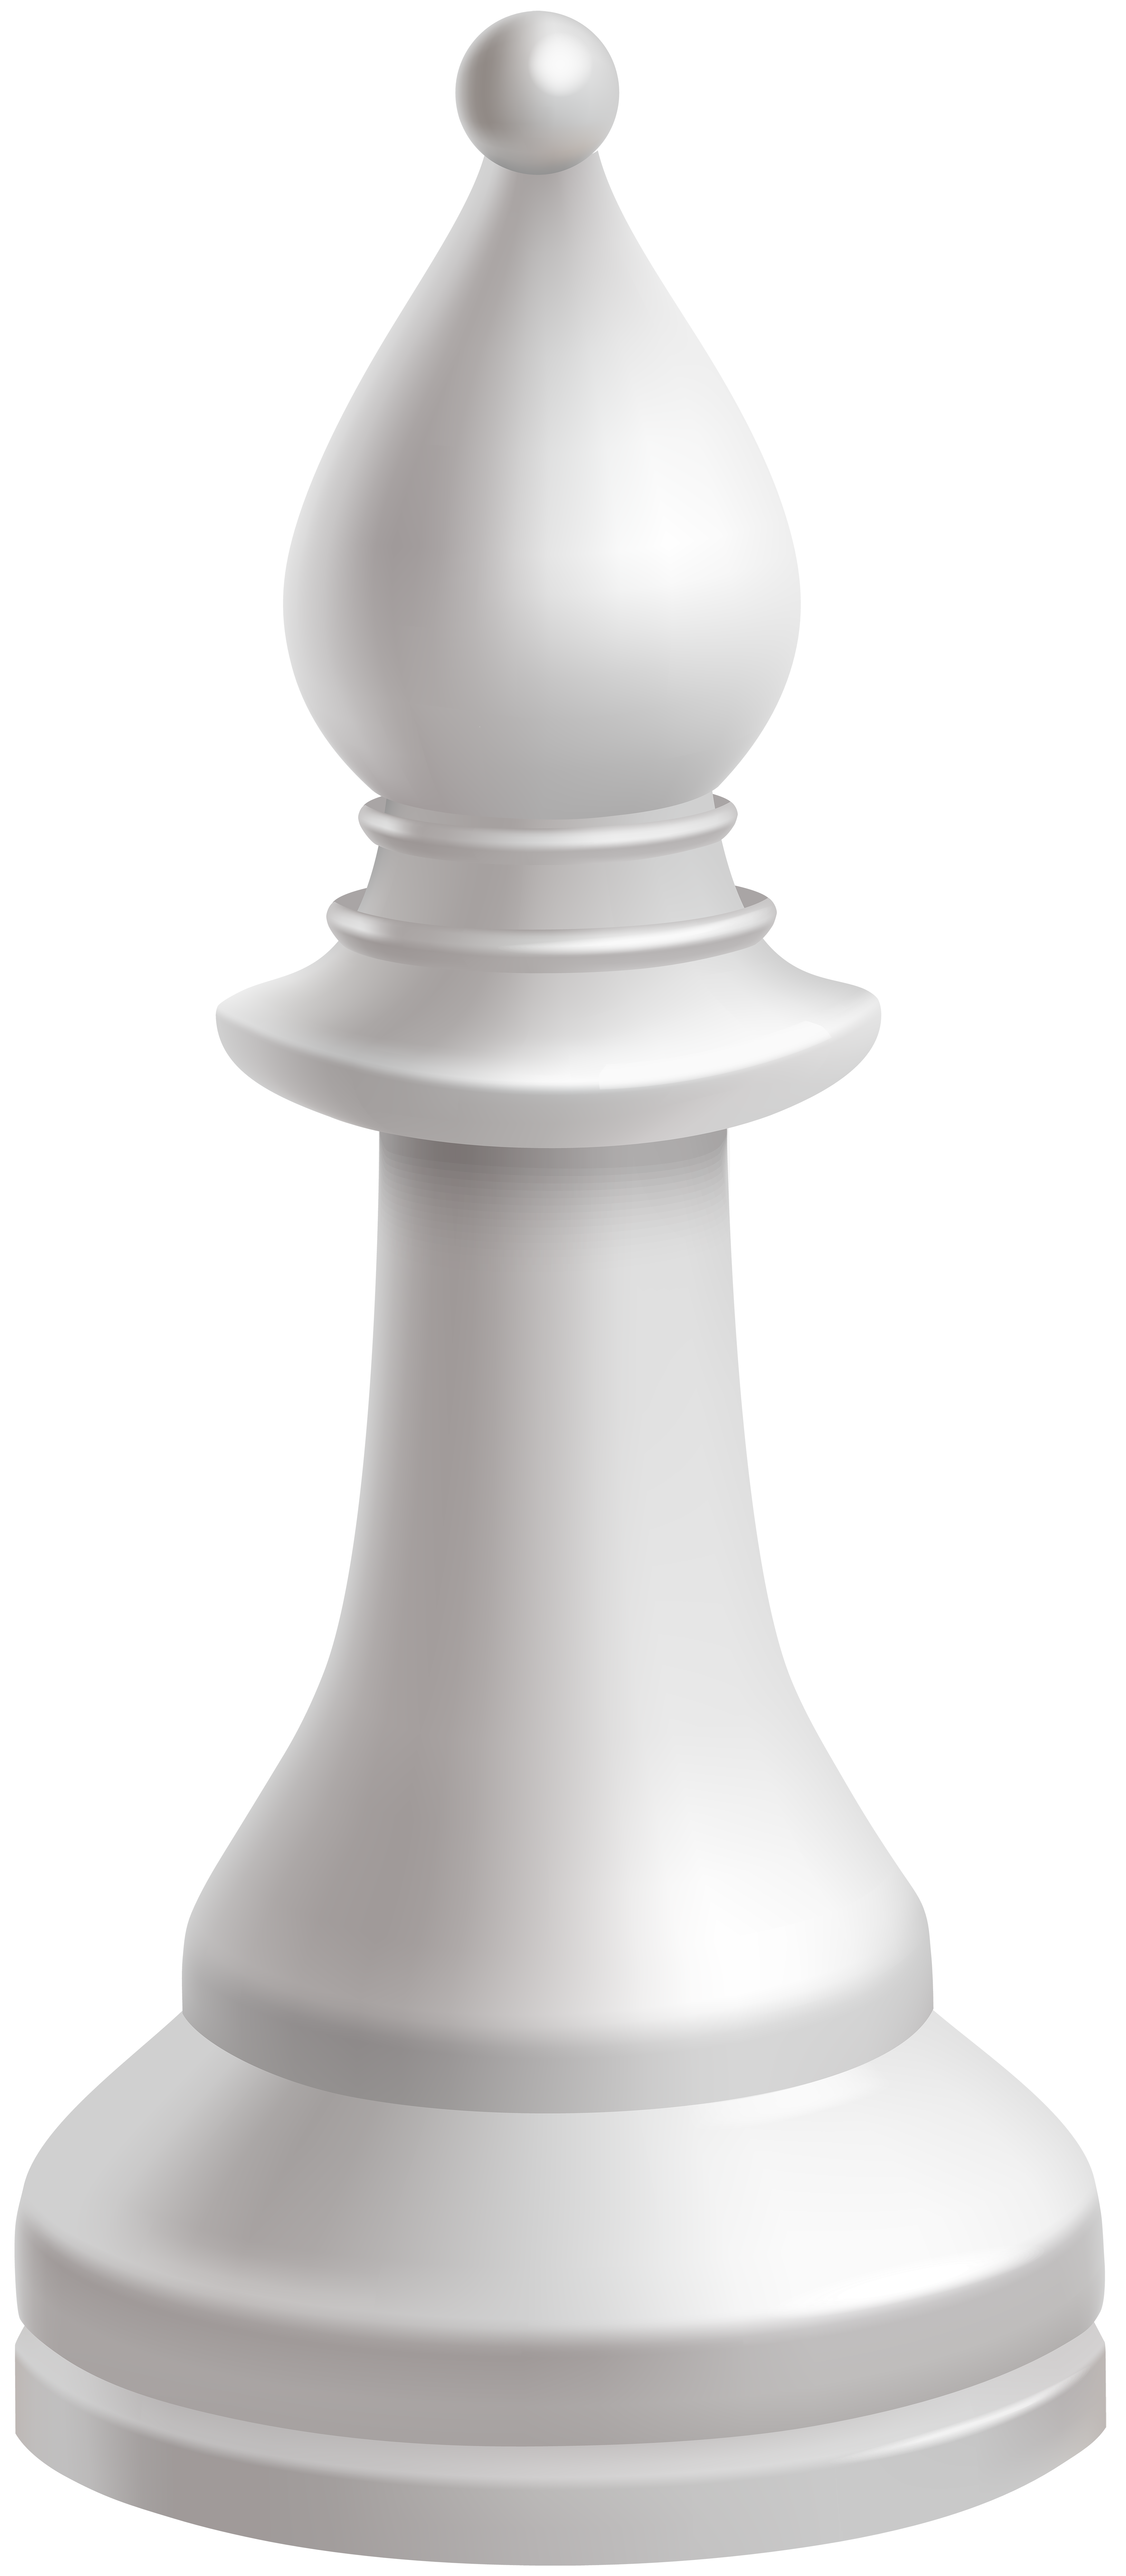 White Bishop Chess